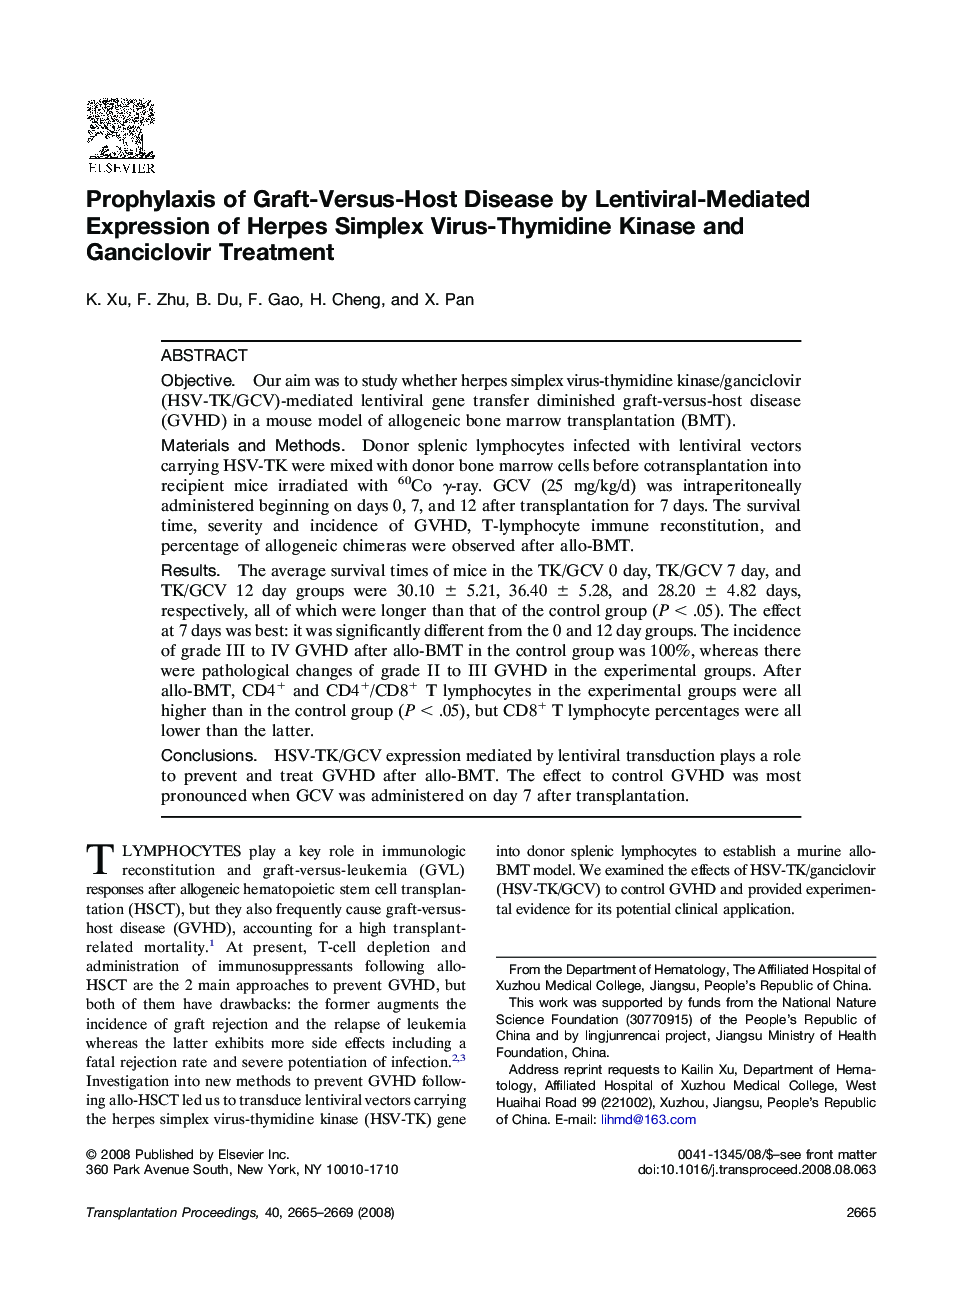 Prophylaxis of Graft-Versus-Host Disease by Lentiviral-Mediated Expression of Herpes Simplex Virus-Thymidine Kinase and Ganciclovir Treatment 